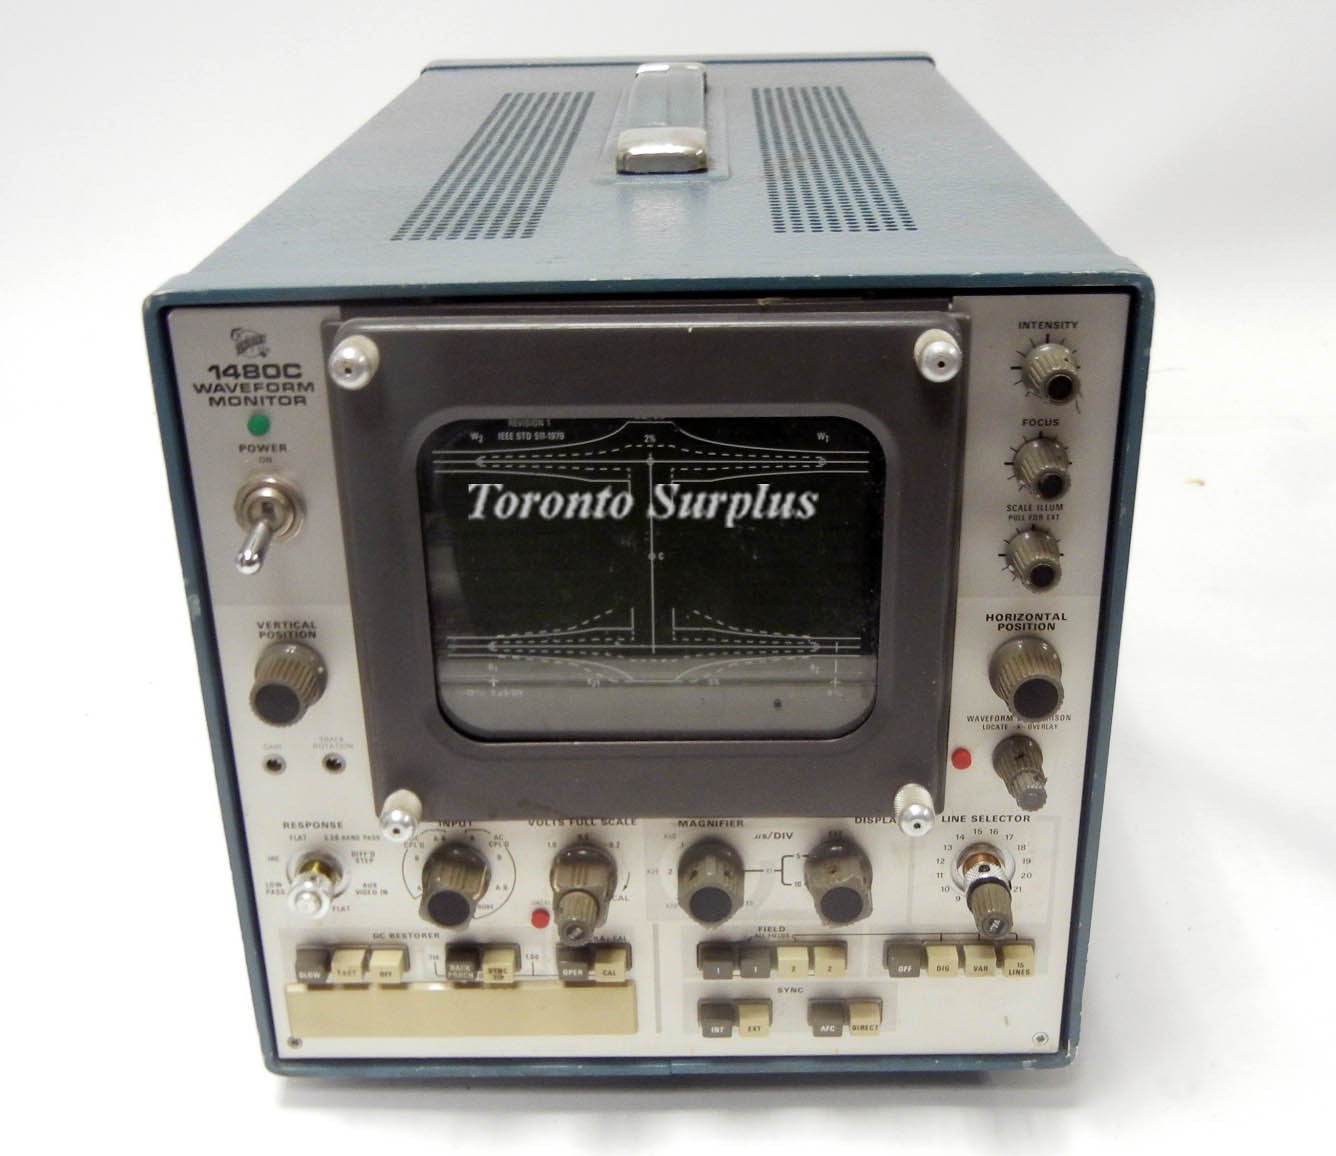 Tektronix 1480C Waveform Monitor.